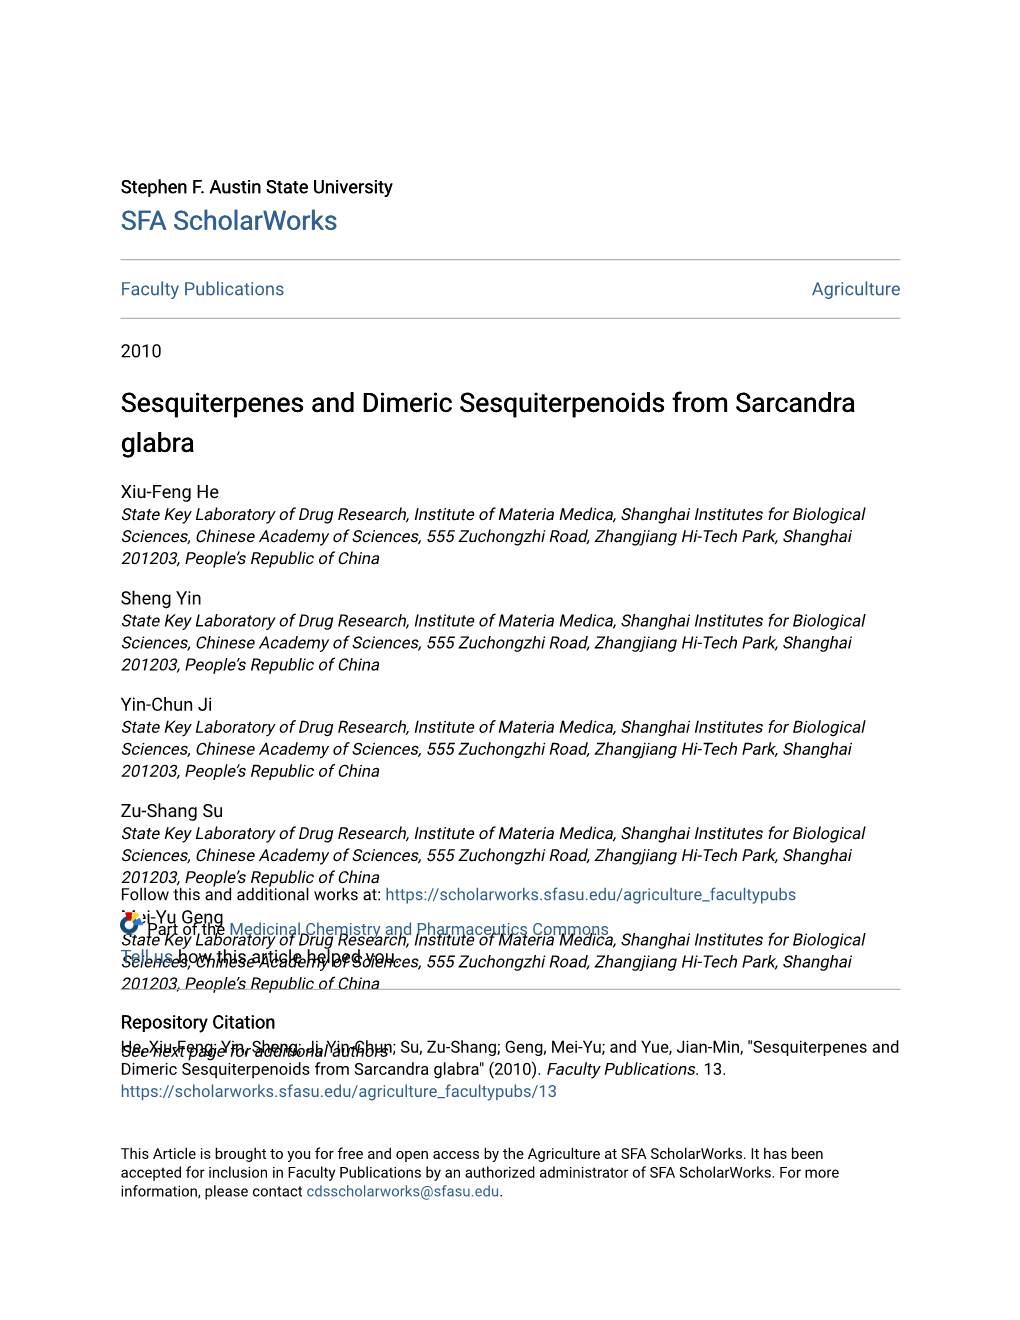 Sesquiterpenes and Dimeric Sesquiterpenoids from Sarcandra Glabra